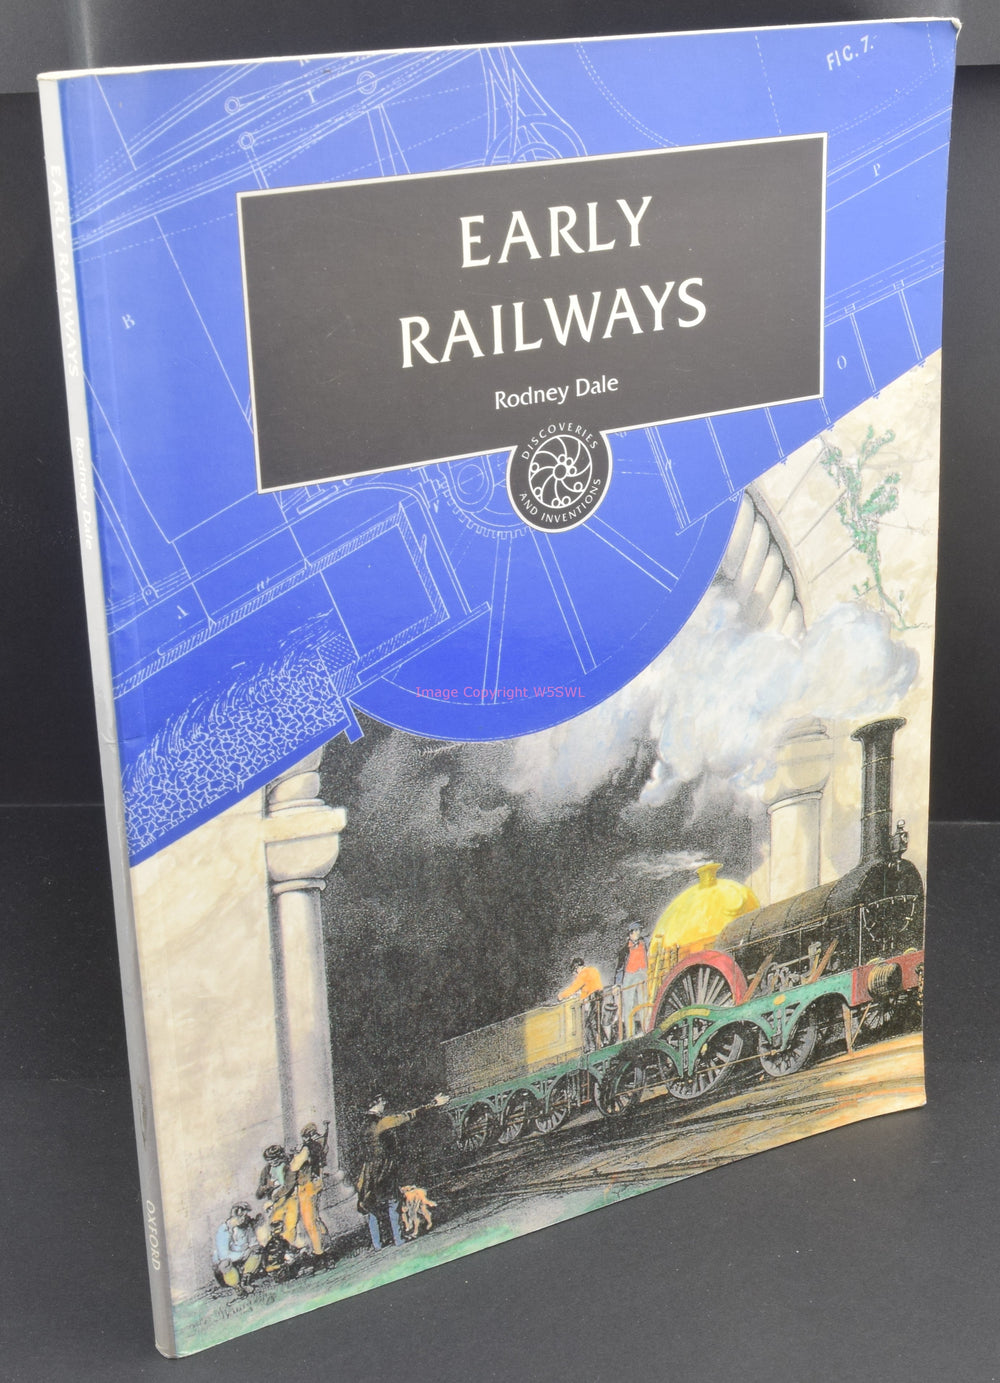 Early Railways by Rodney Dale - Dave's Hobby Shop by W5SWL